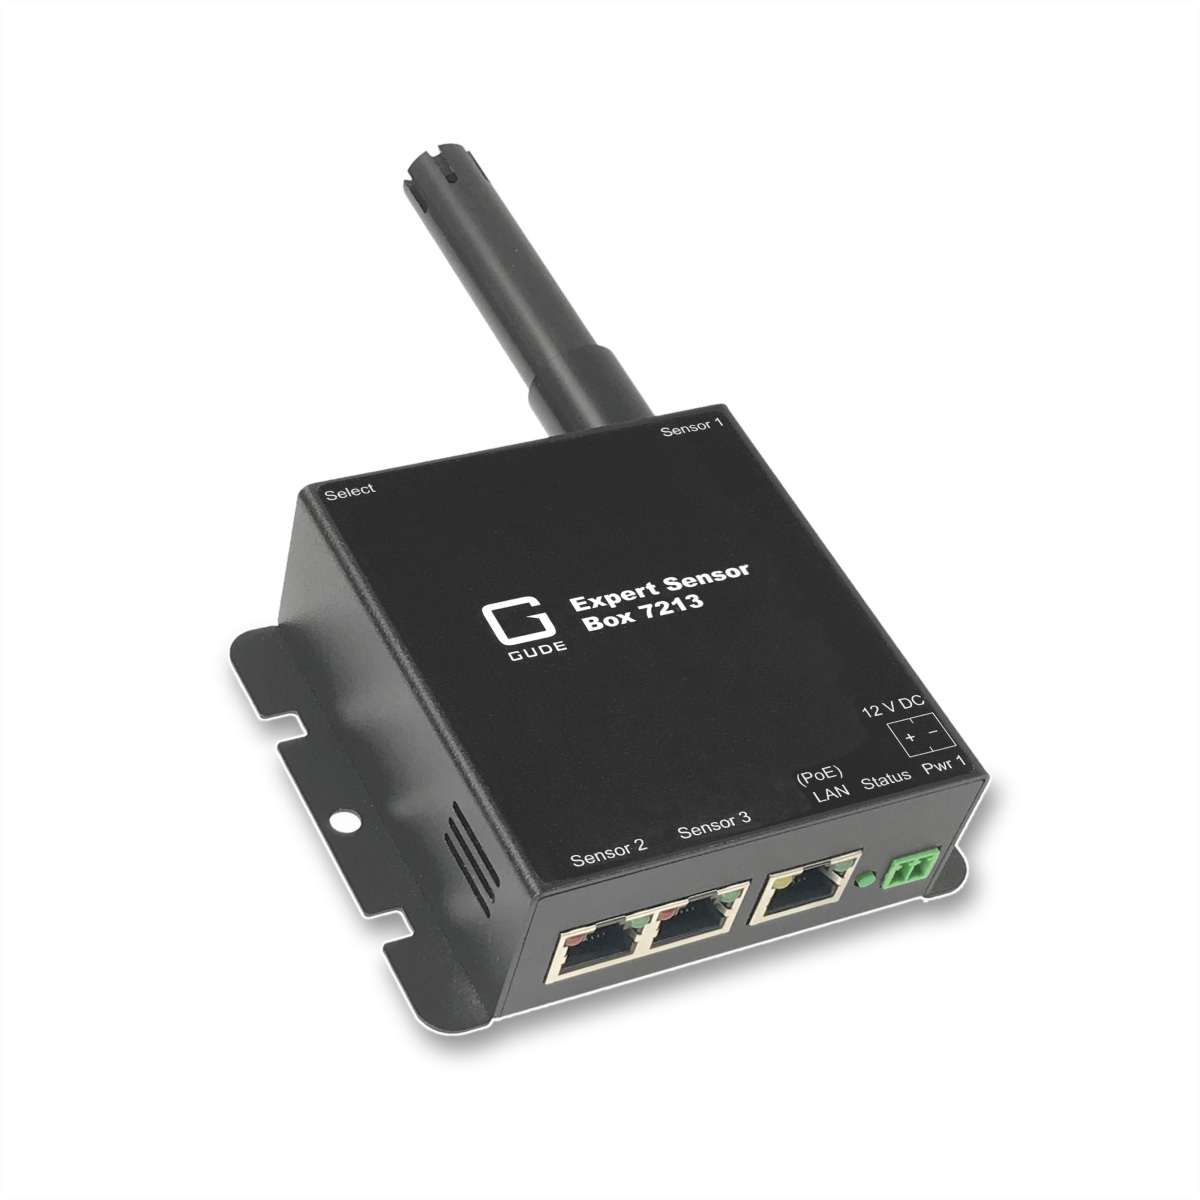 GUDE Sensor 7213-12 Expert Sensor Box Temp-H, Schnittstellen: Erweiterungsanschluss, Modultyp: Monitoring-Module, Remote Zugriff Art: Ethernet